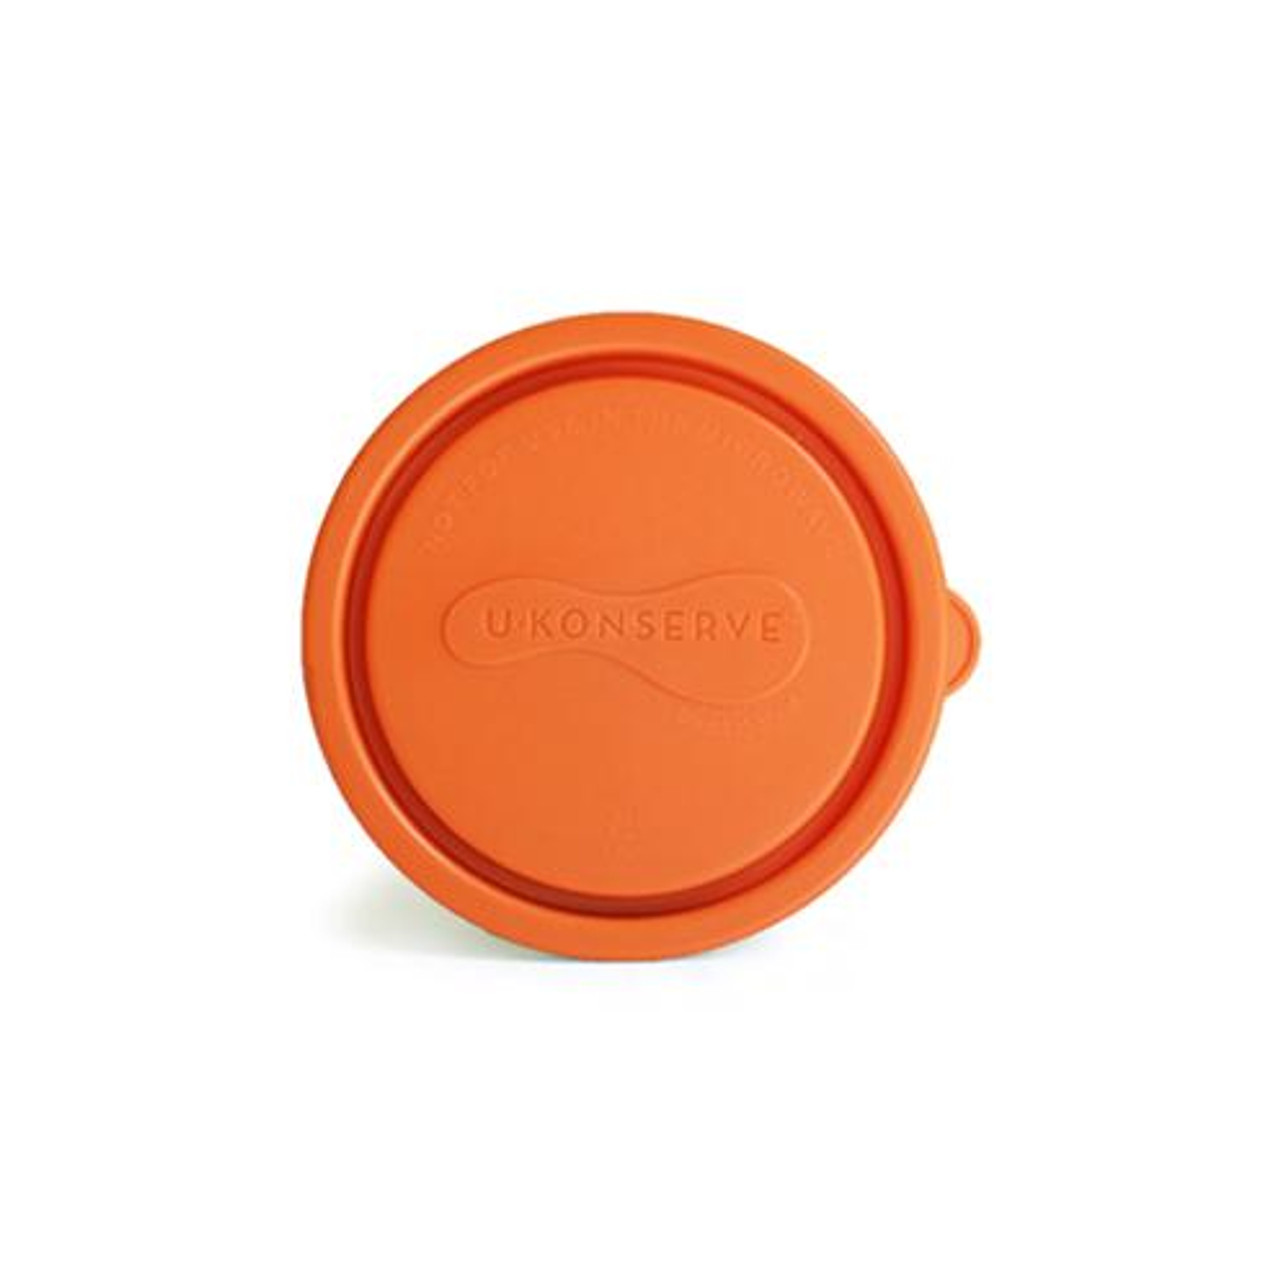 U-Konserve Stainless Steel Small Round Container - Orange